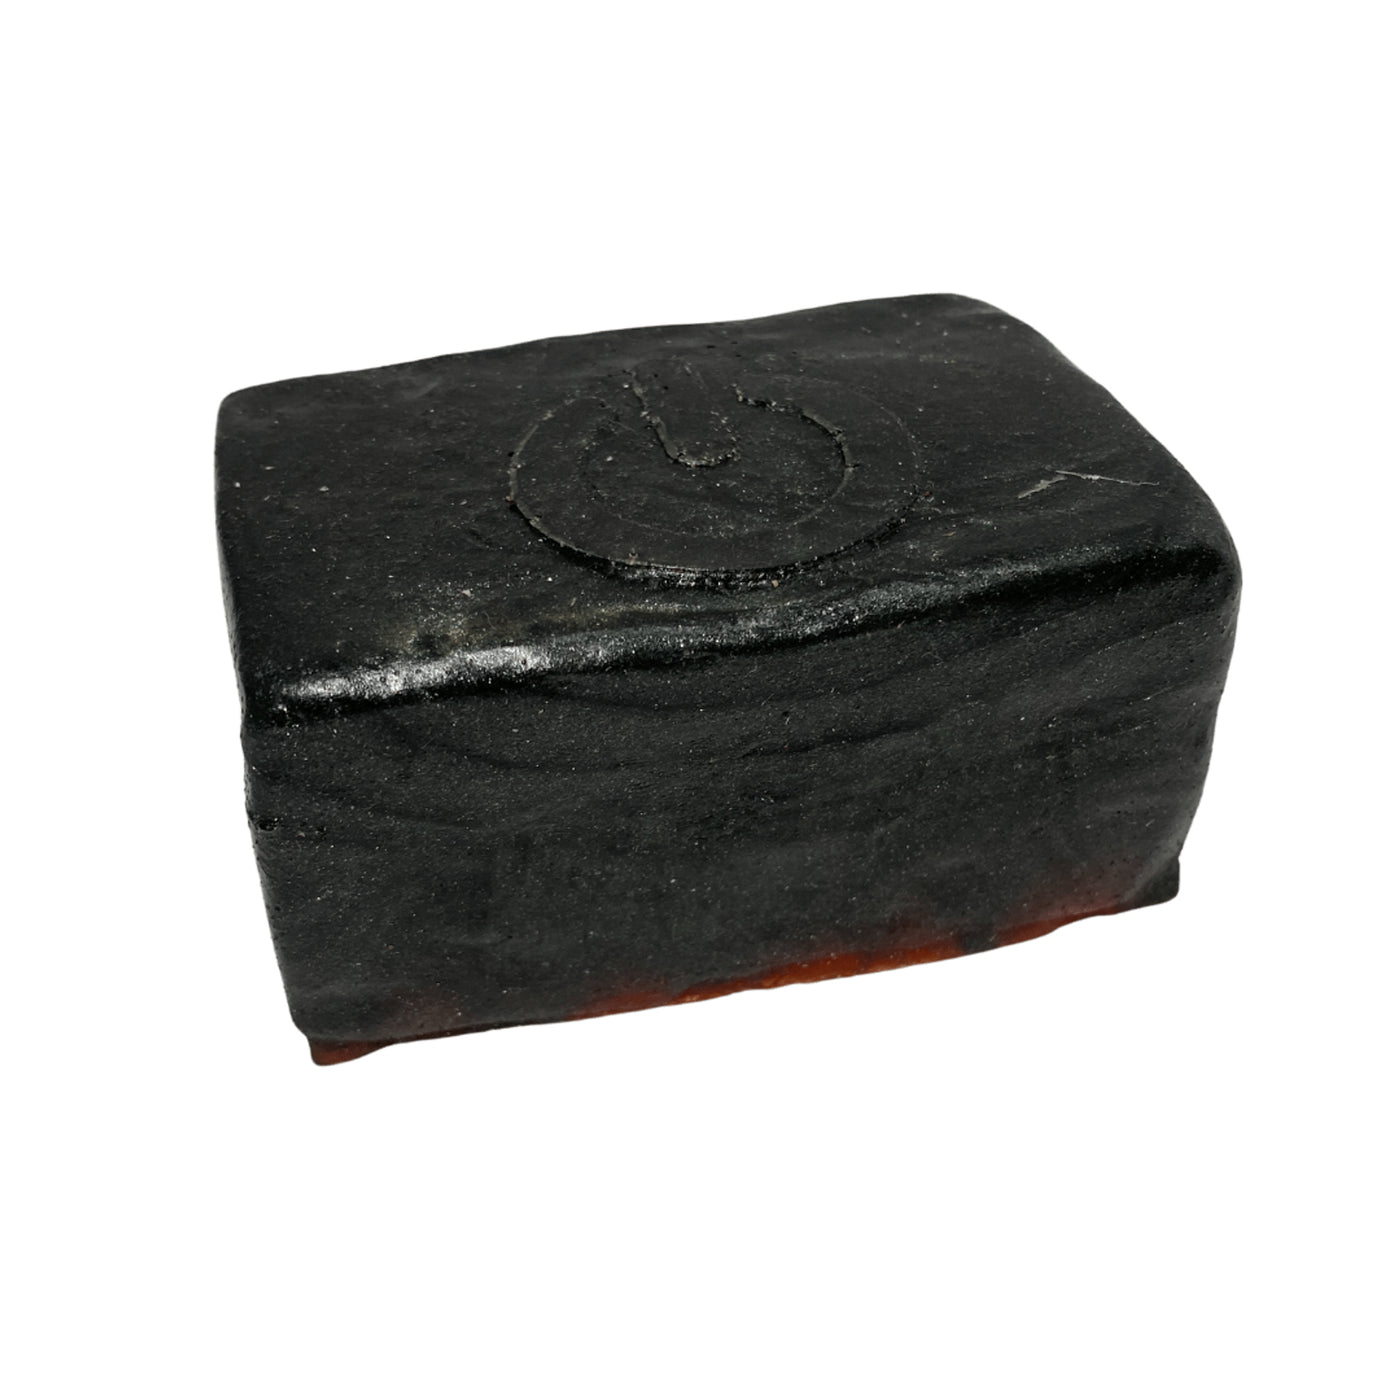 OSBS x Electric Stoke Collab Pocket Rock - The Soap Bar